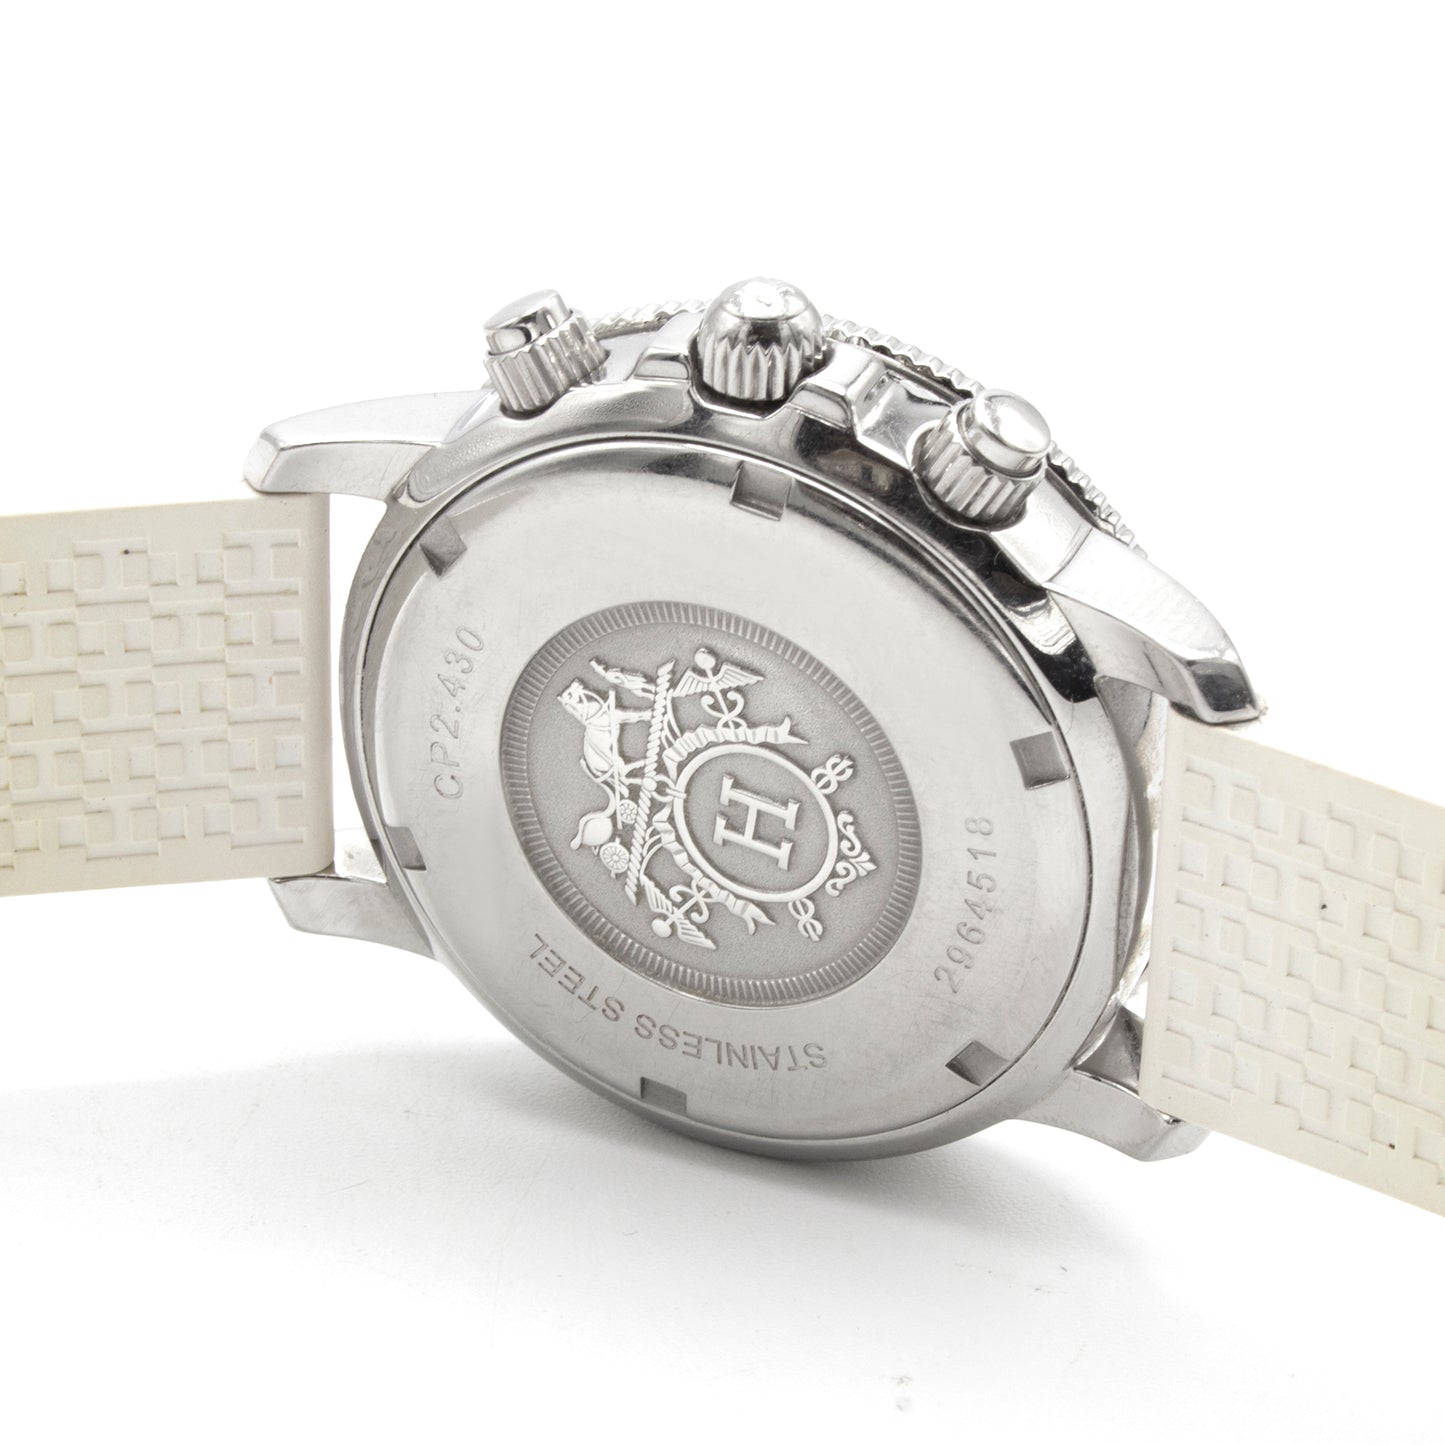 Hermès Clipper Chrono CP2.430 watch